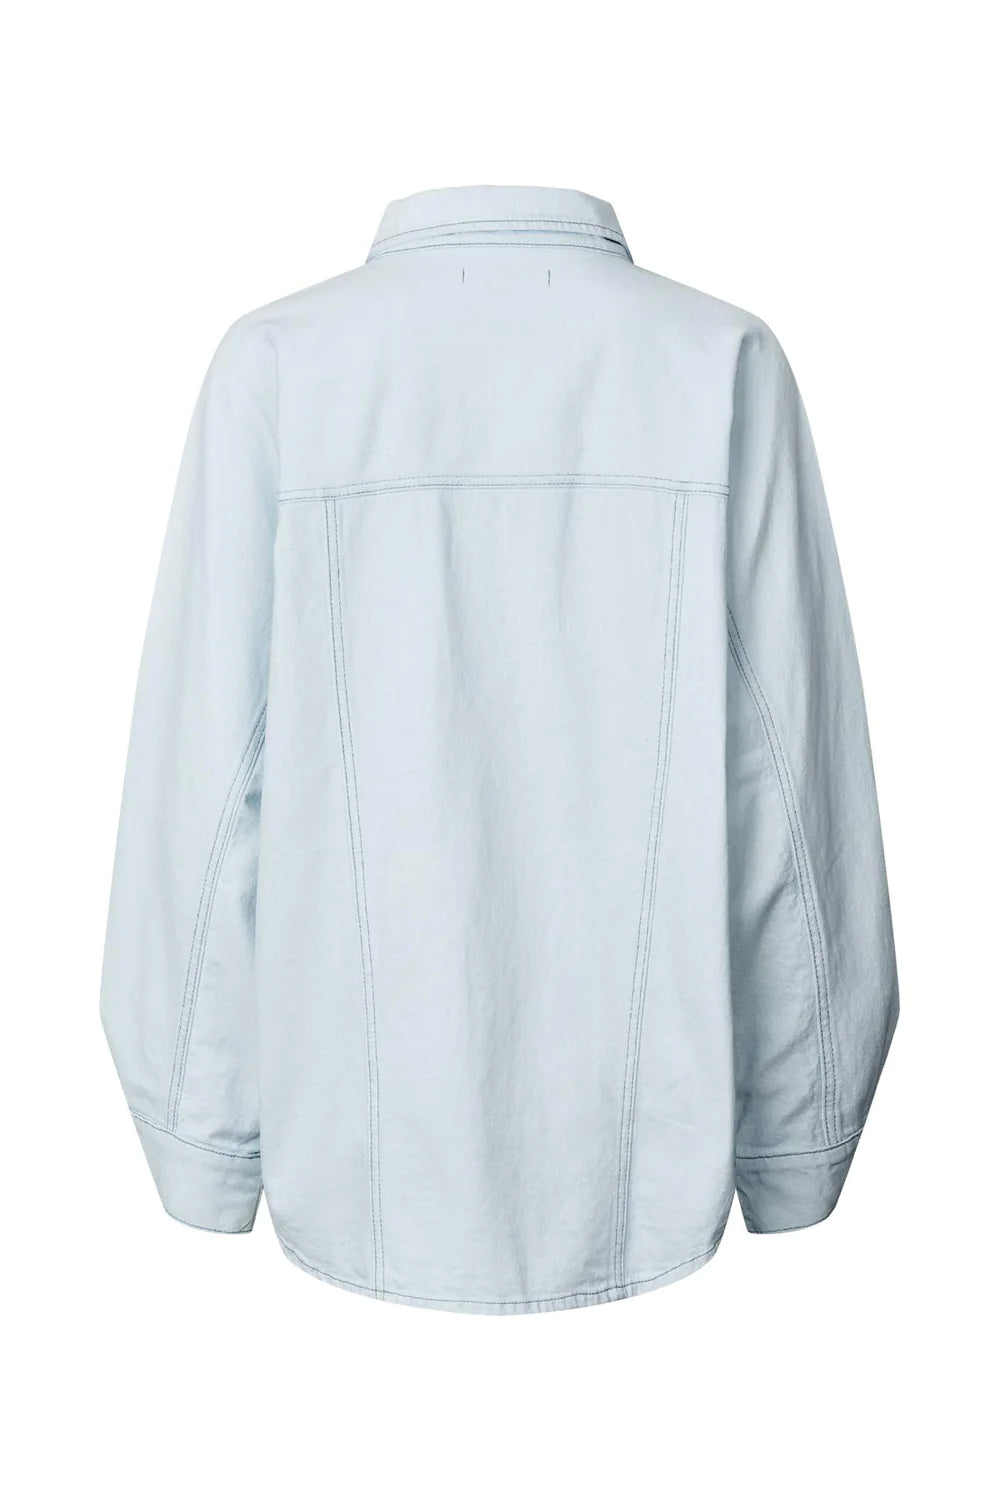 Jeja denim shirt jacket in light wash